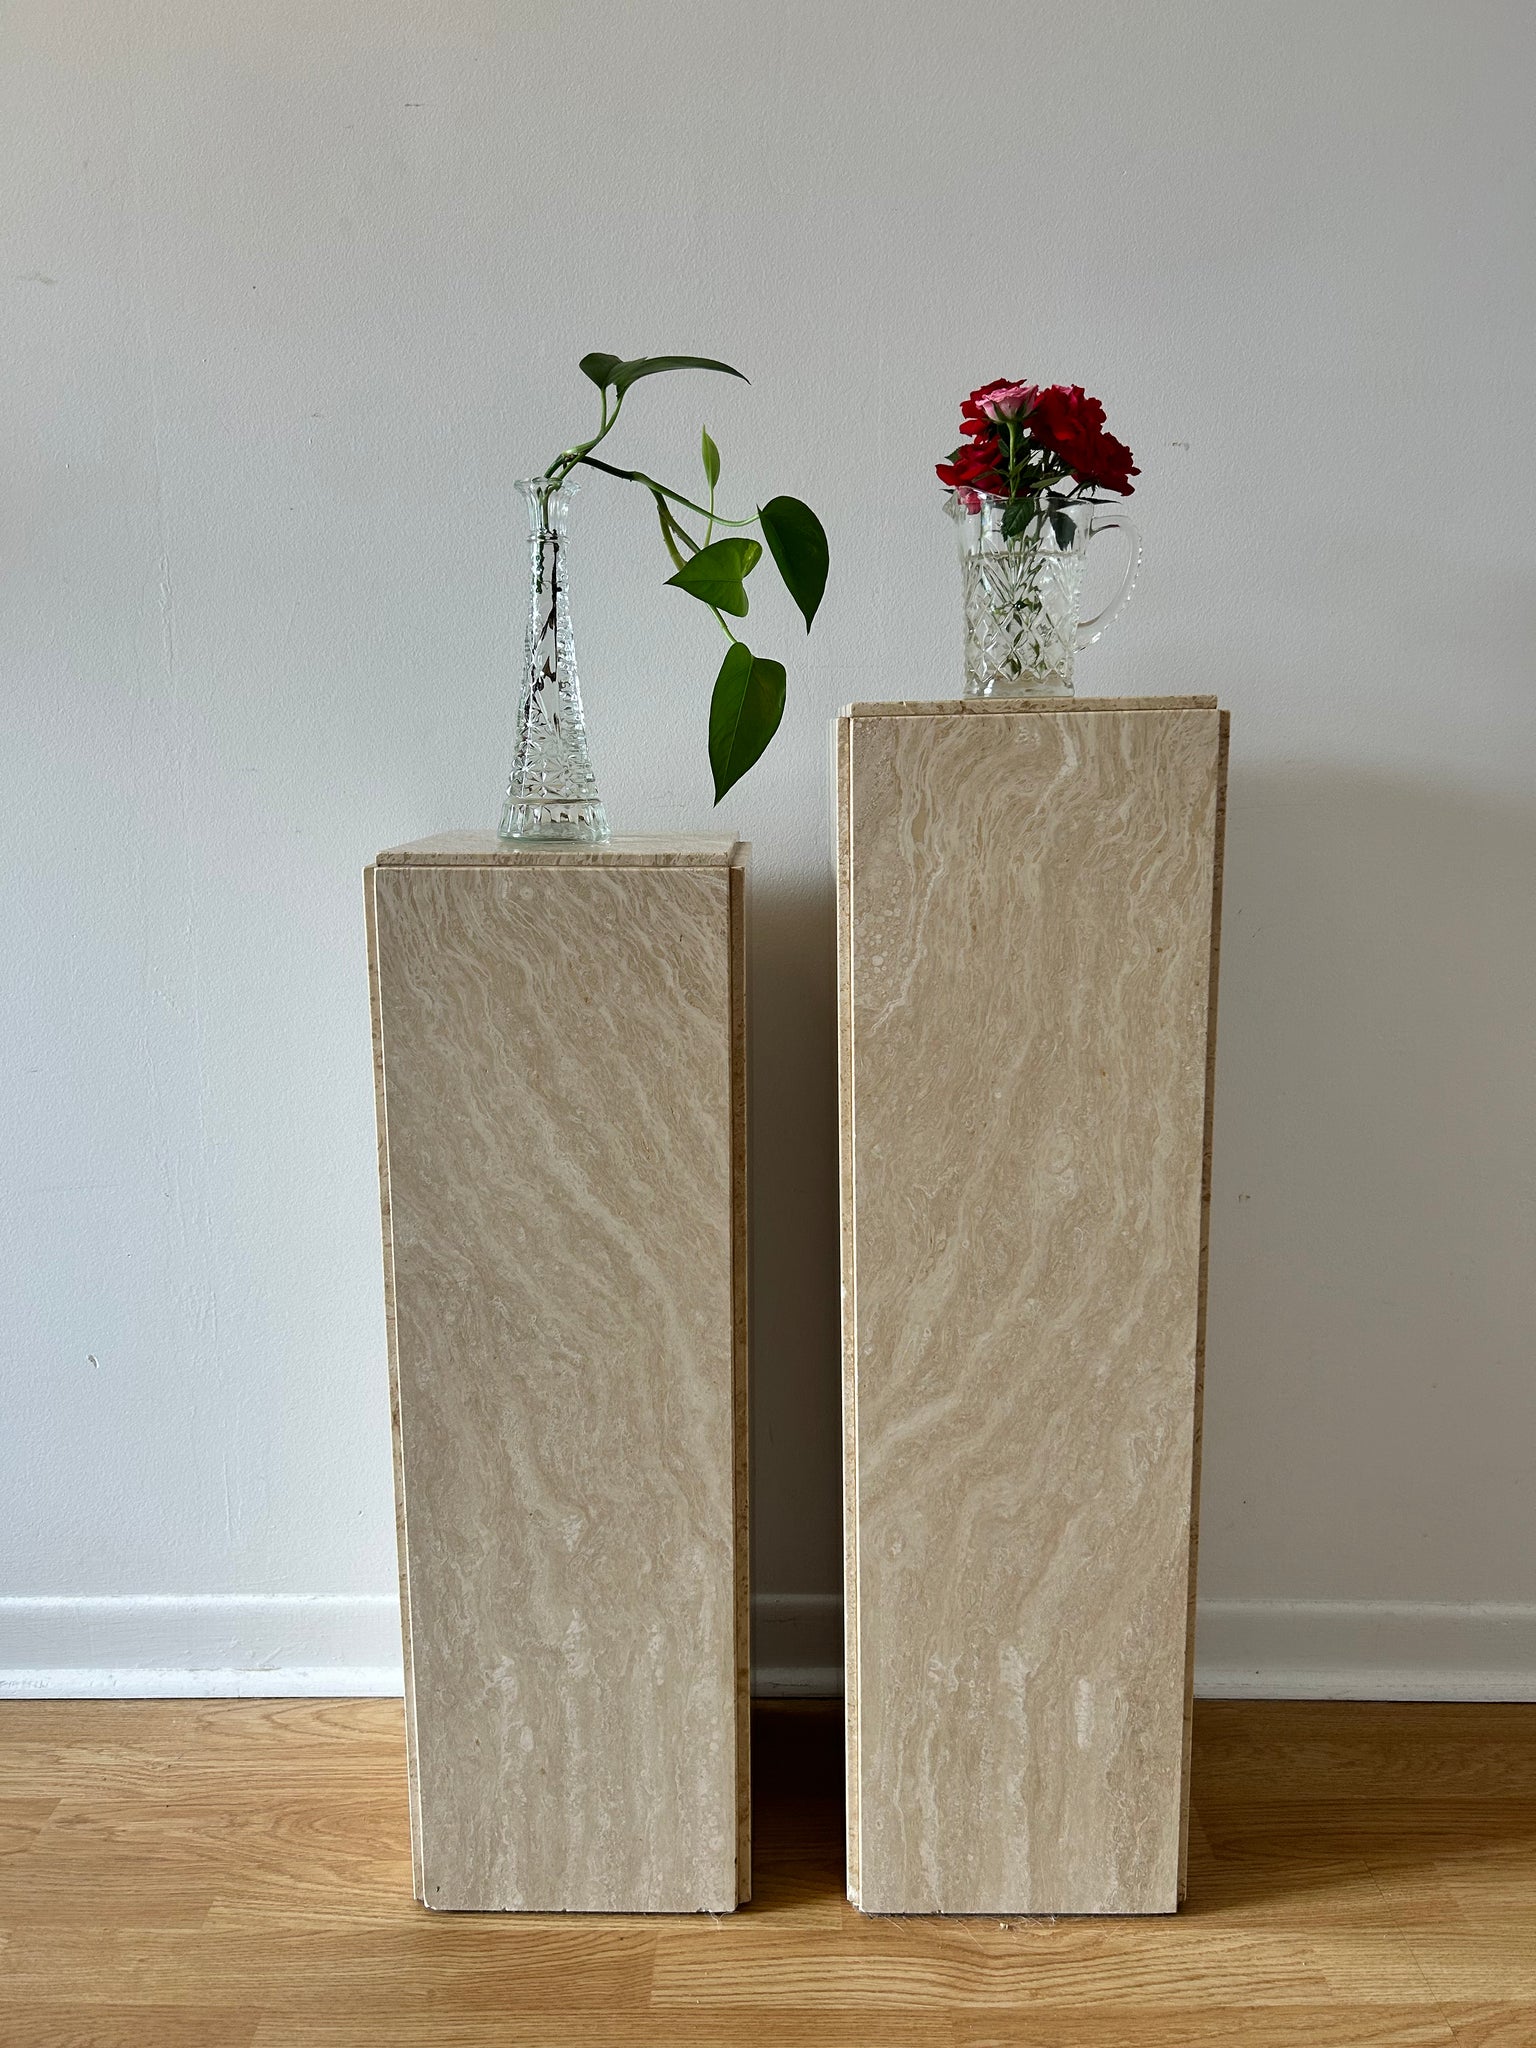 Marbled travertine stone podiums